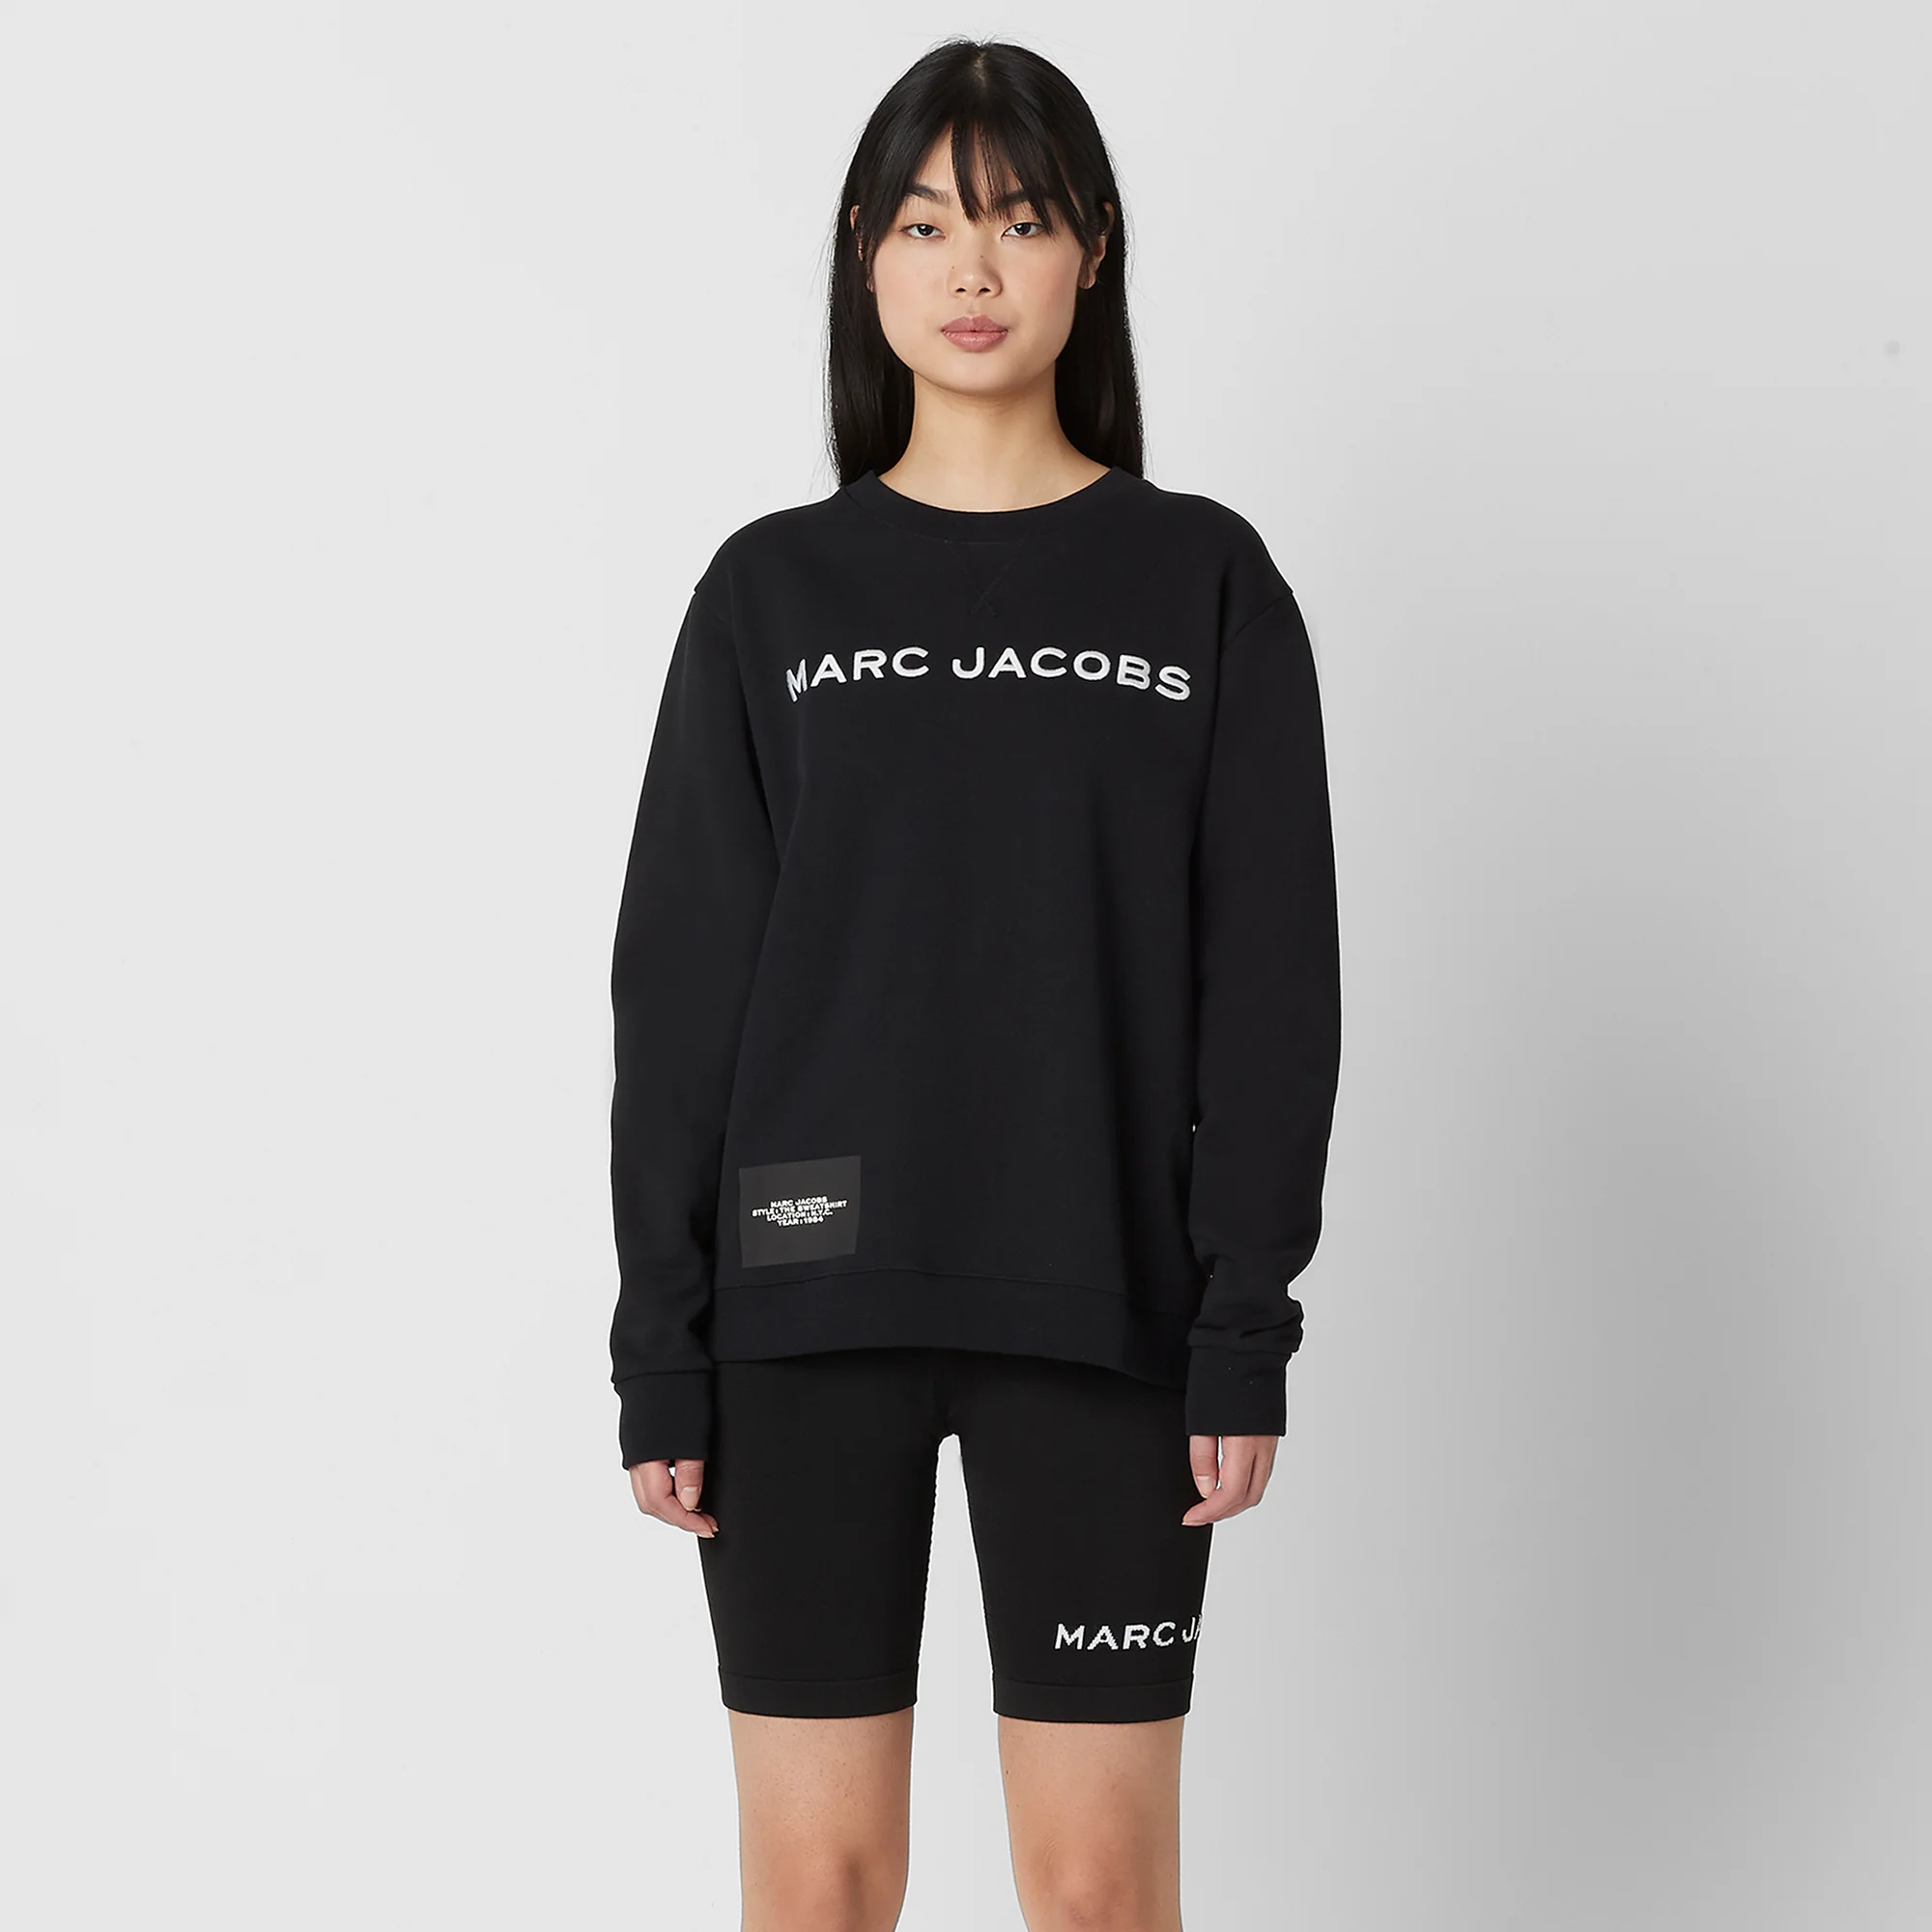 Marc Jacobs Women's The Sweatshirt - Black Image 1